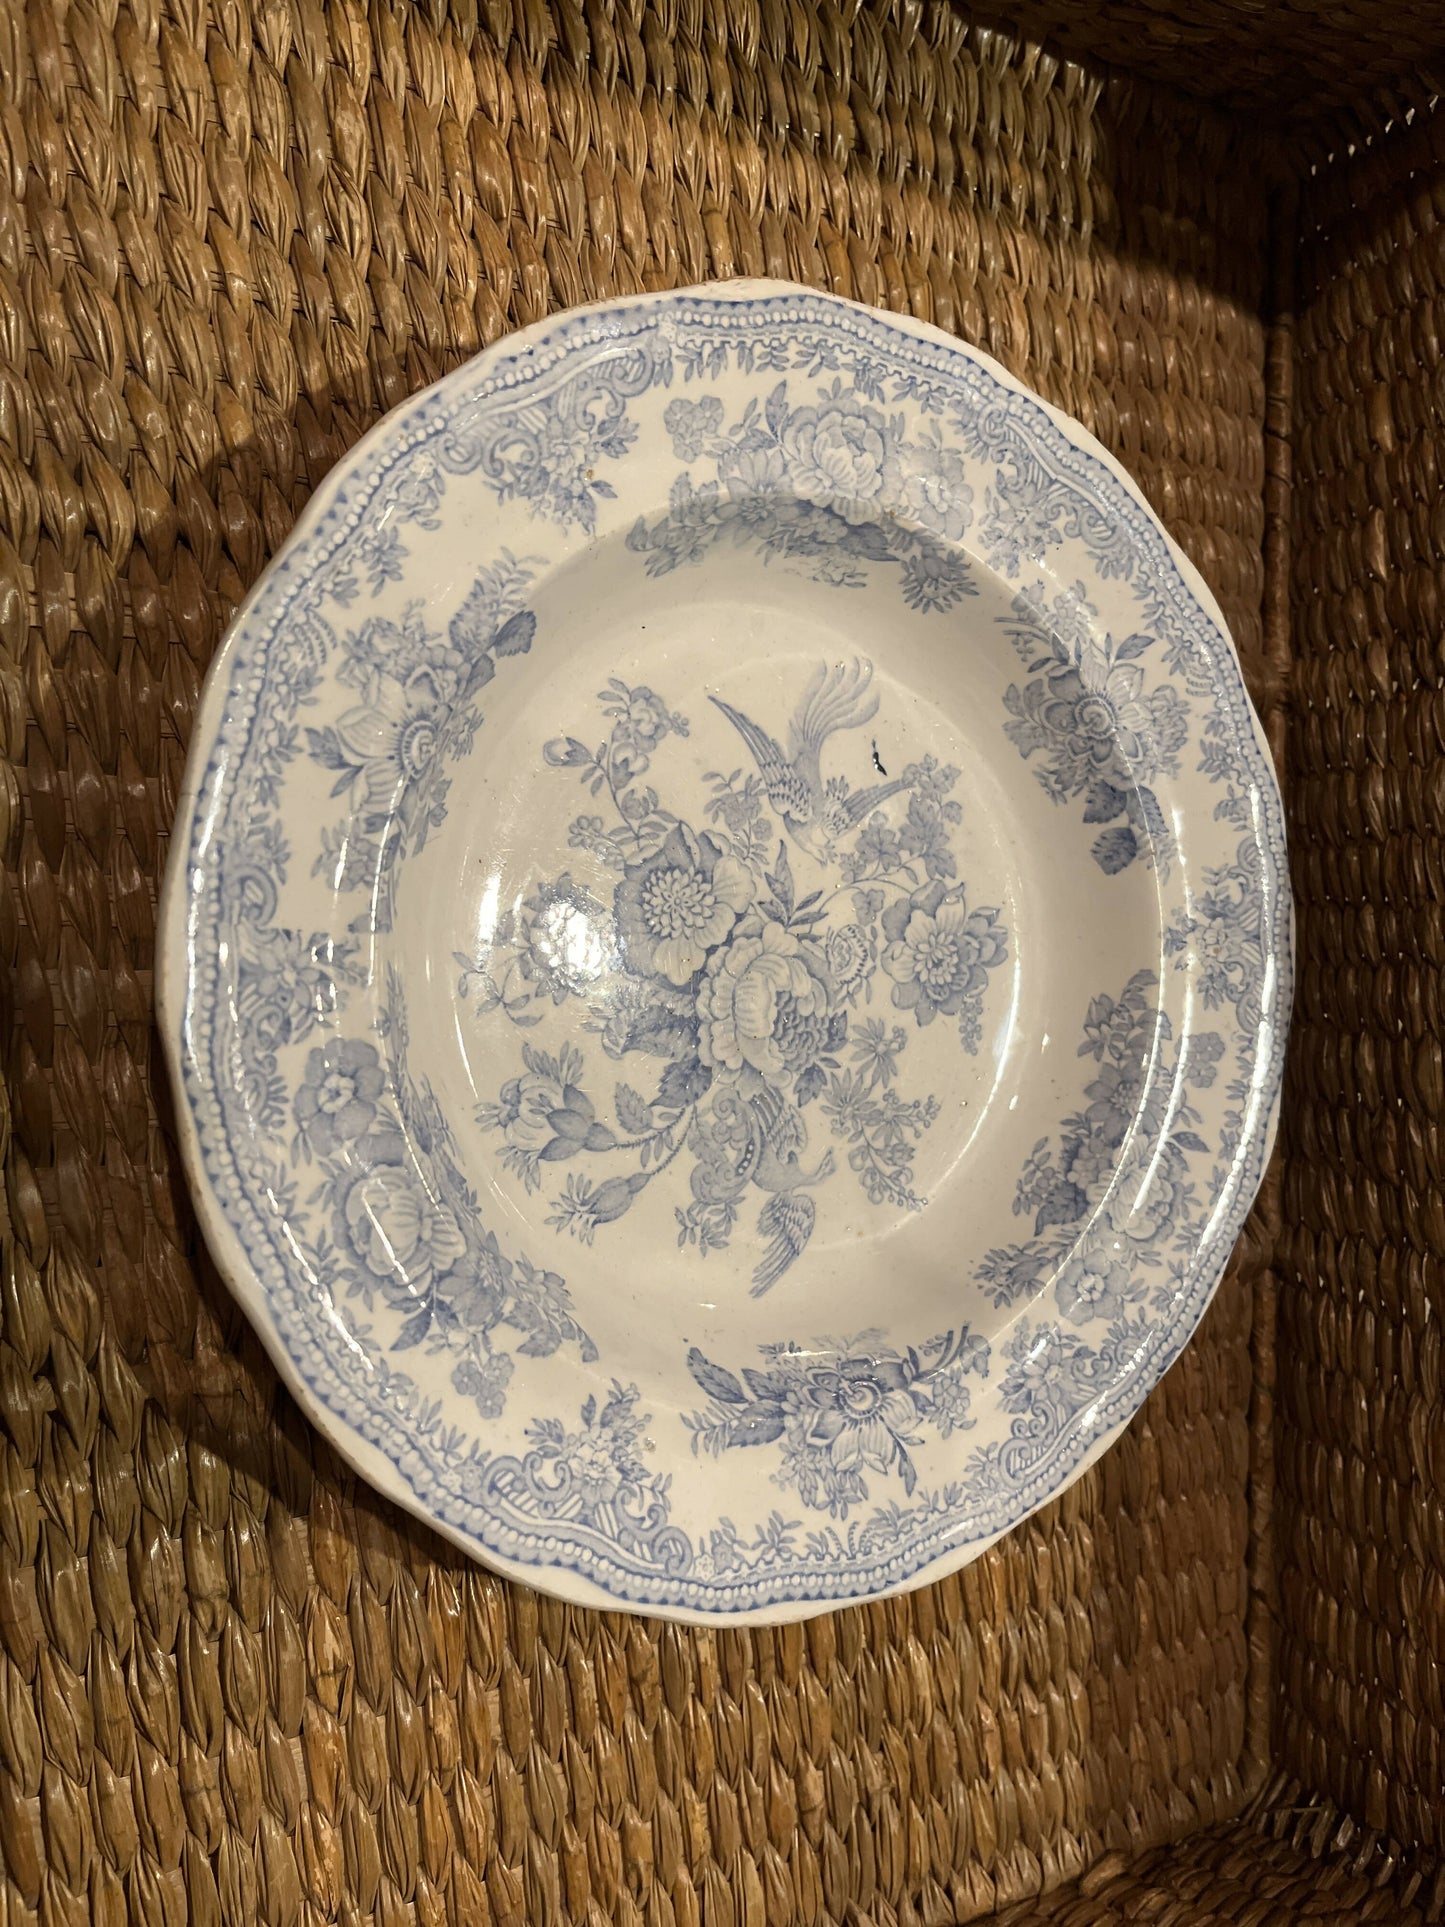 Antique c. 19th century “Asiatic Pheasants” English ironstone serving bowl